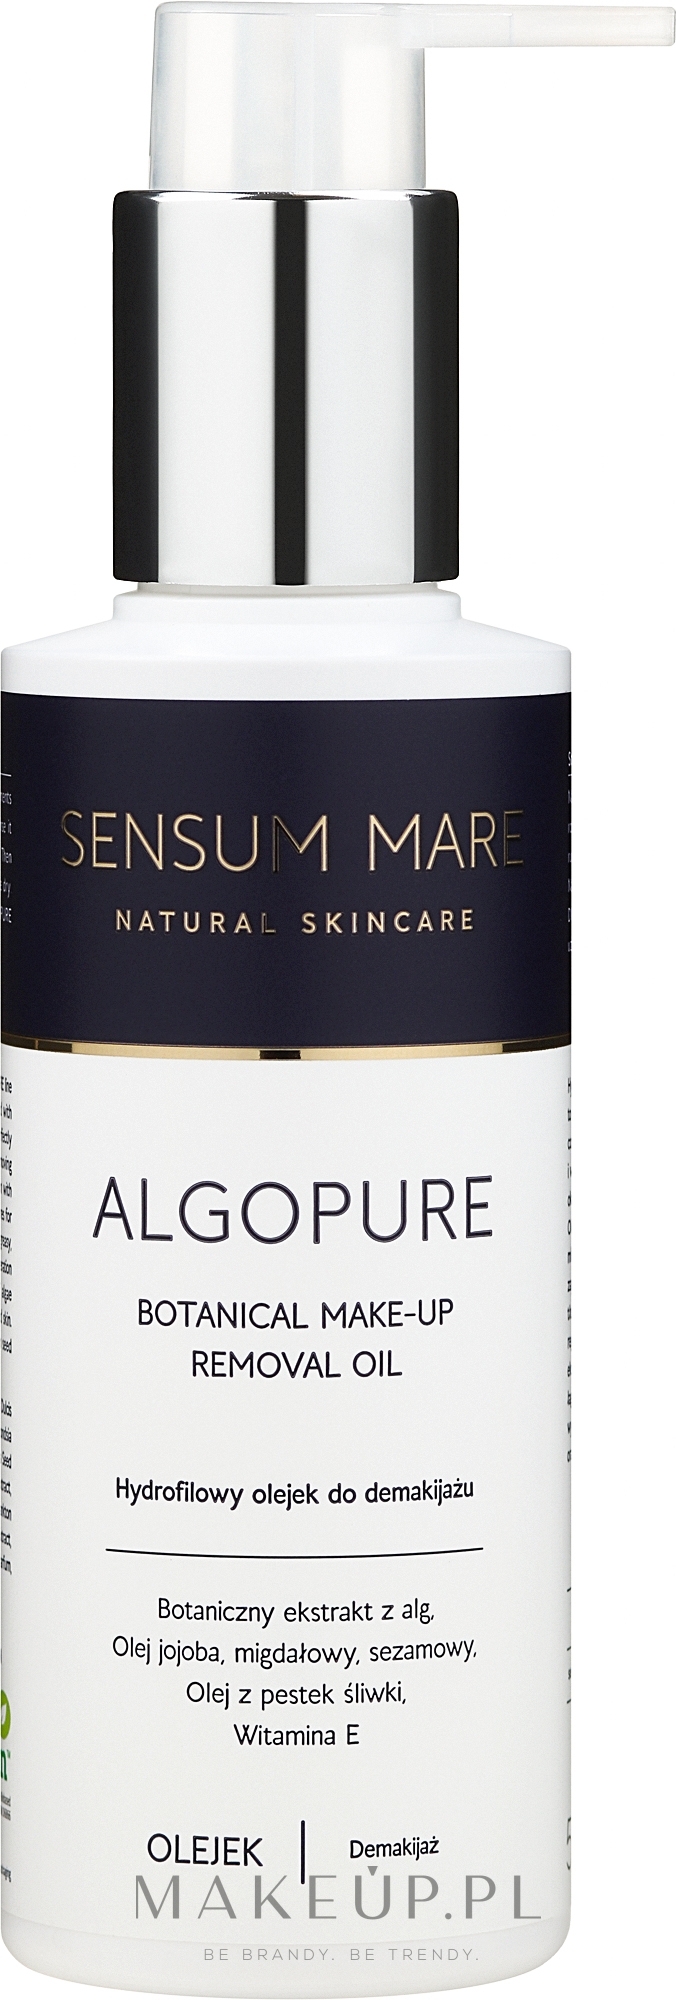 Emulsja do demakijażu - Sensum Mare Algopure Botanical Make-Up Removal Oil — Zdjęcie 150 ml